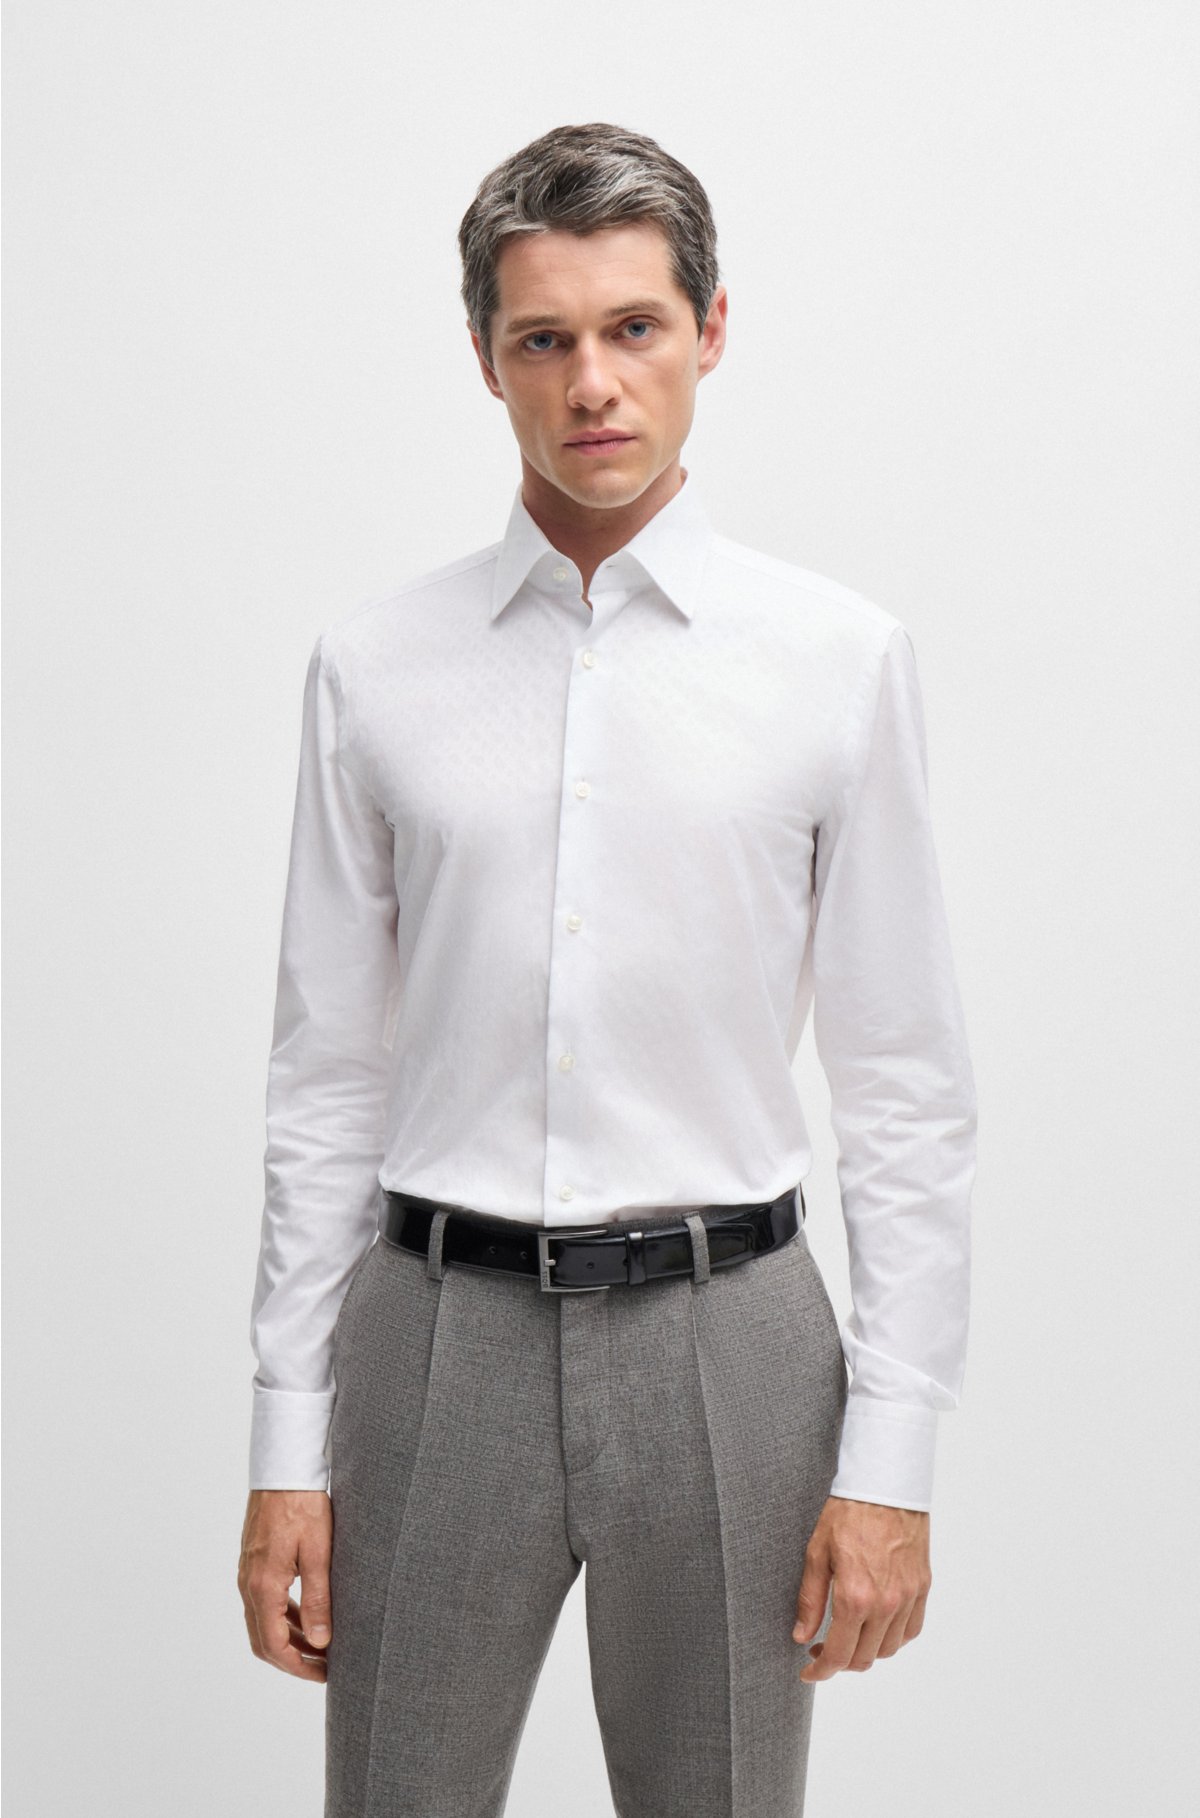 Eh Trivial bordillo BOSS - Slim-fit shirt in Italian cotton with jacquard monograms